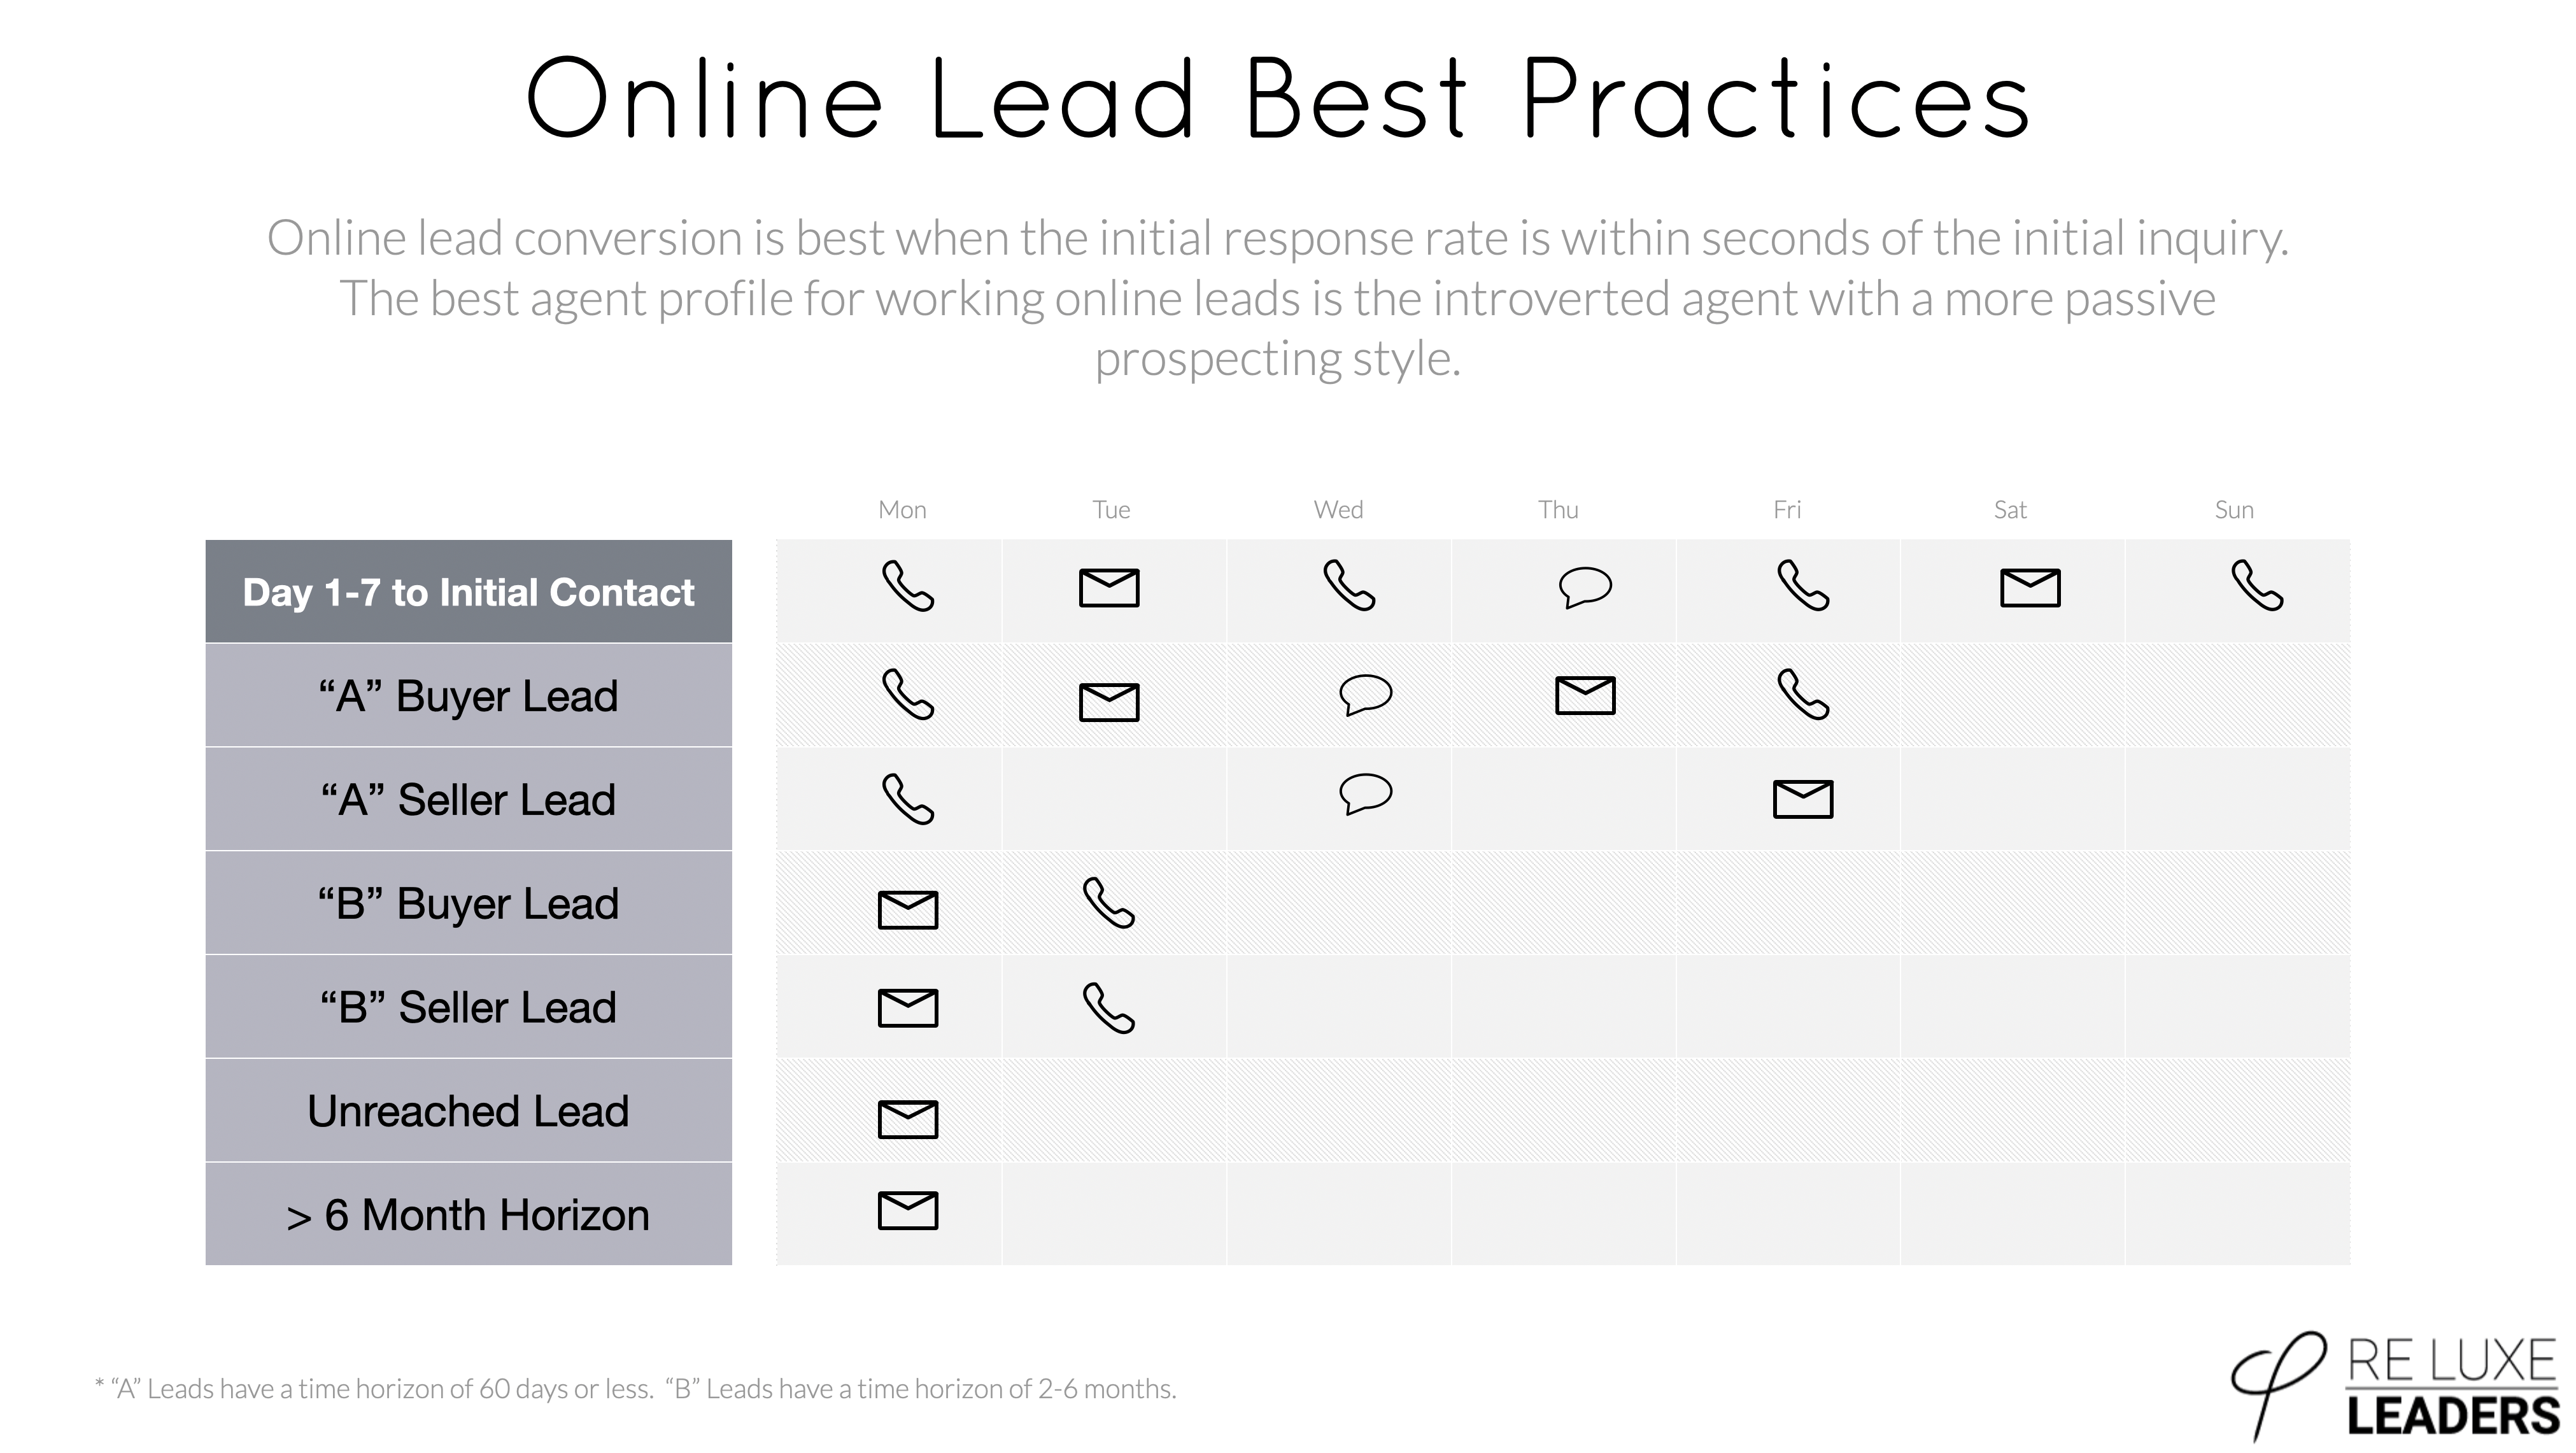 Online Lead Best Practices Infographic